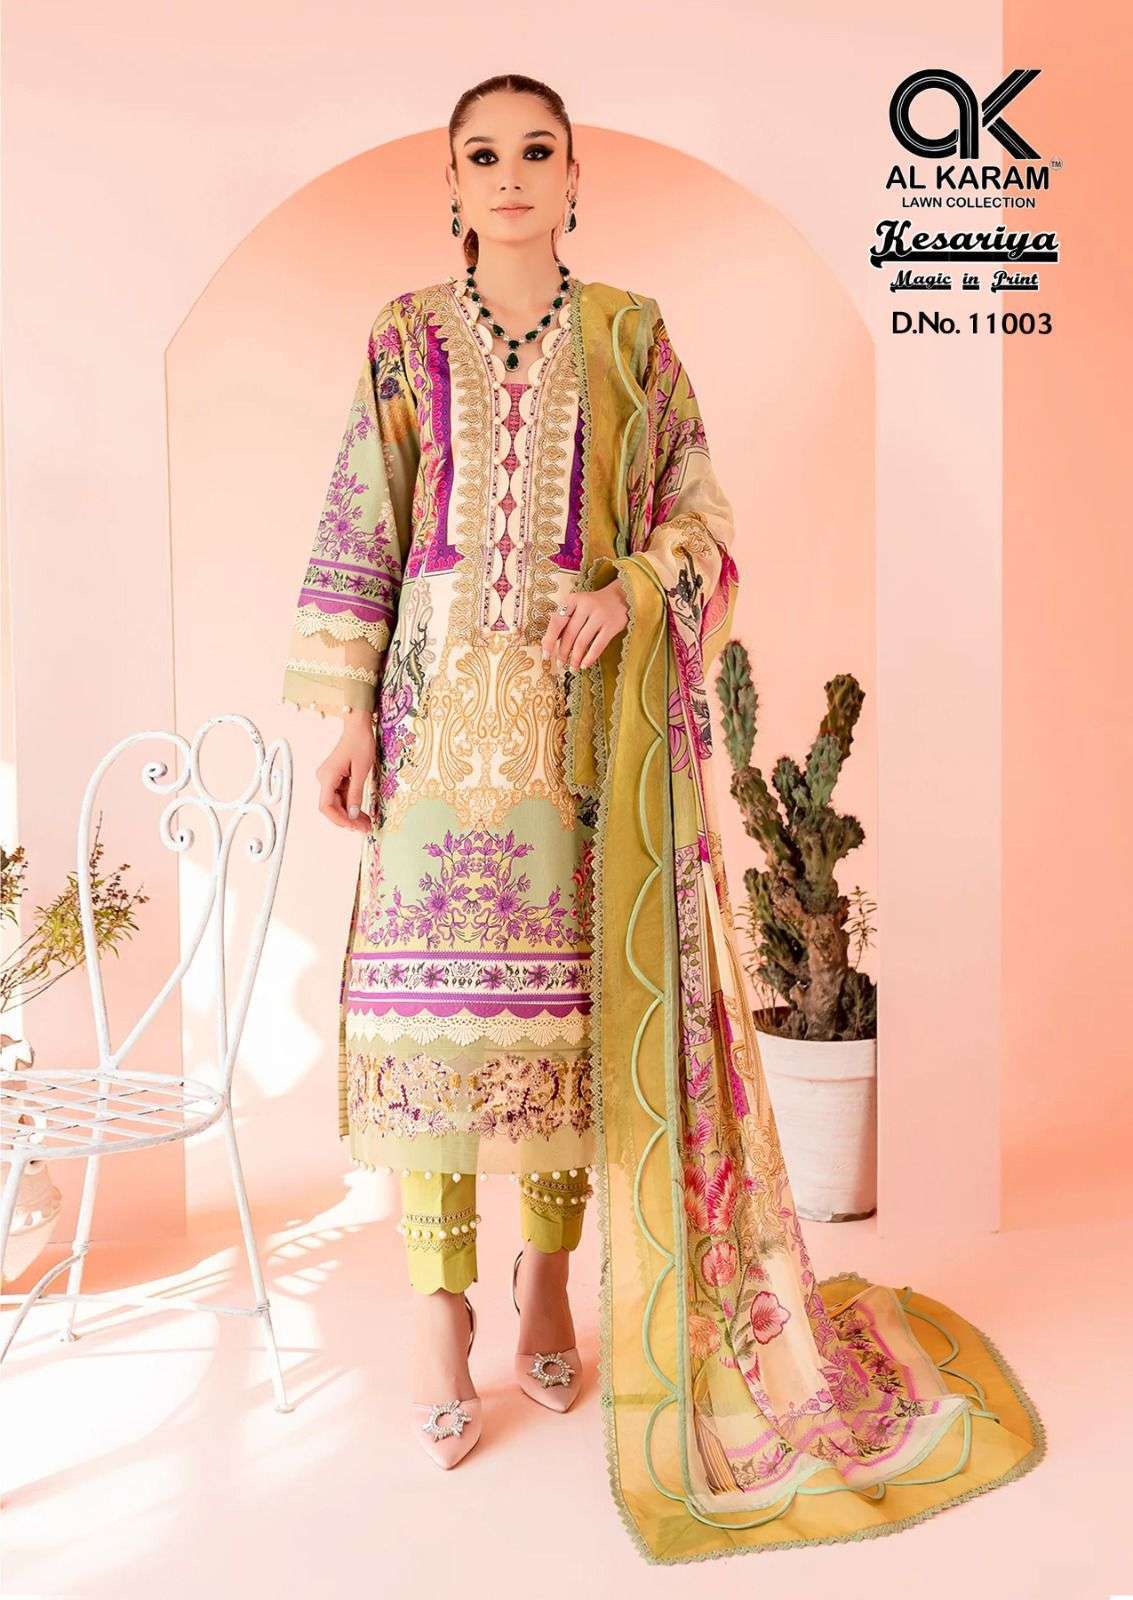 Al Karam Kesariya Vol 11 Cambric Cotton Dress material market in Ahmedabad